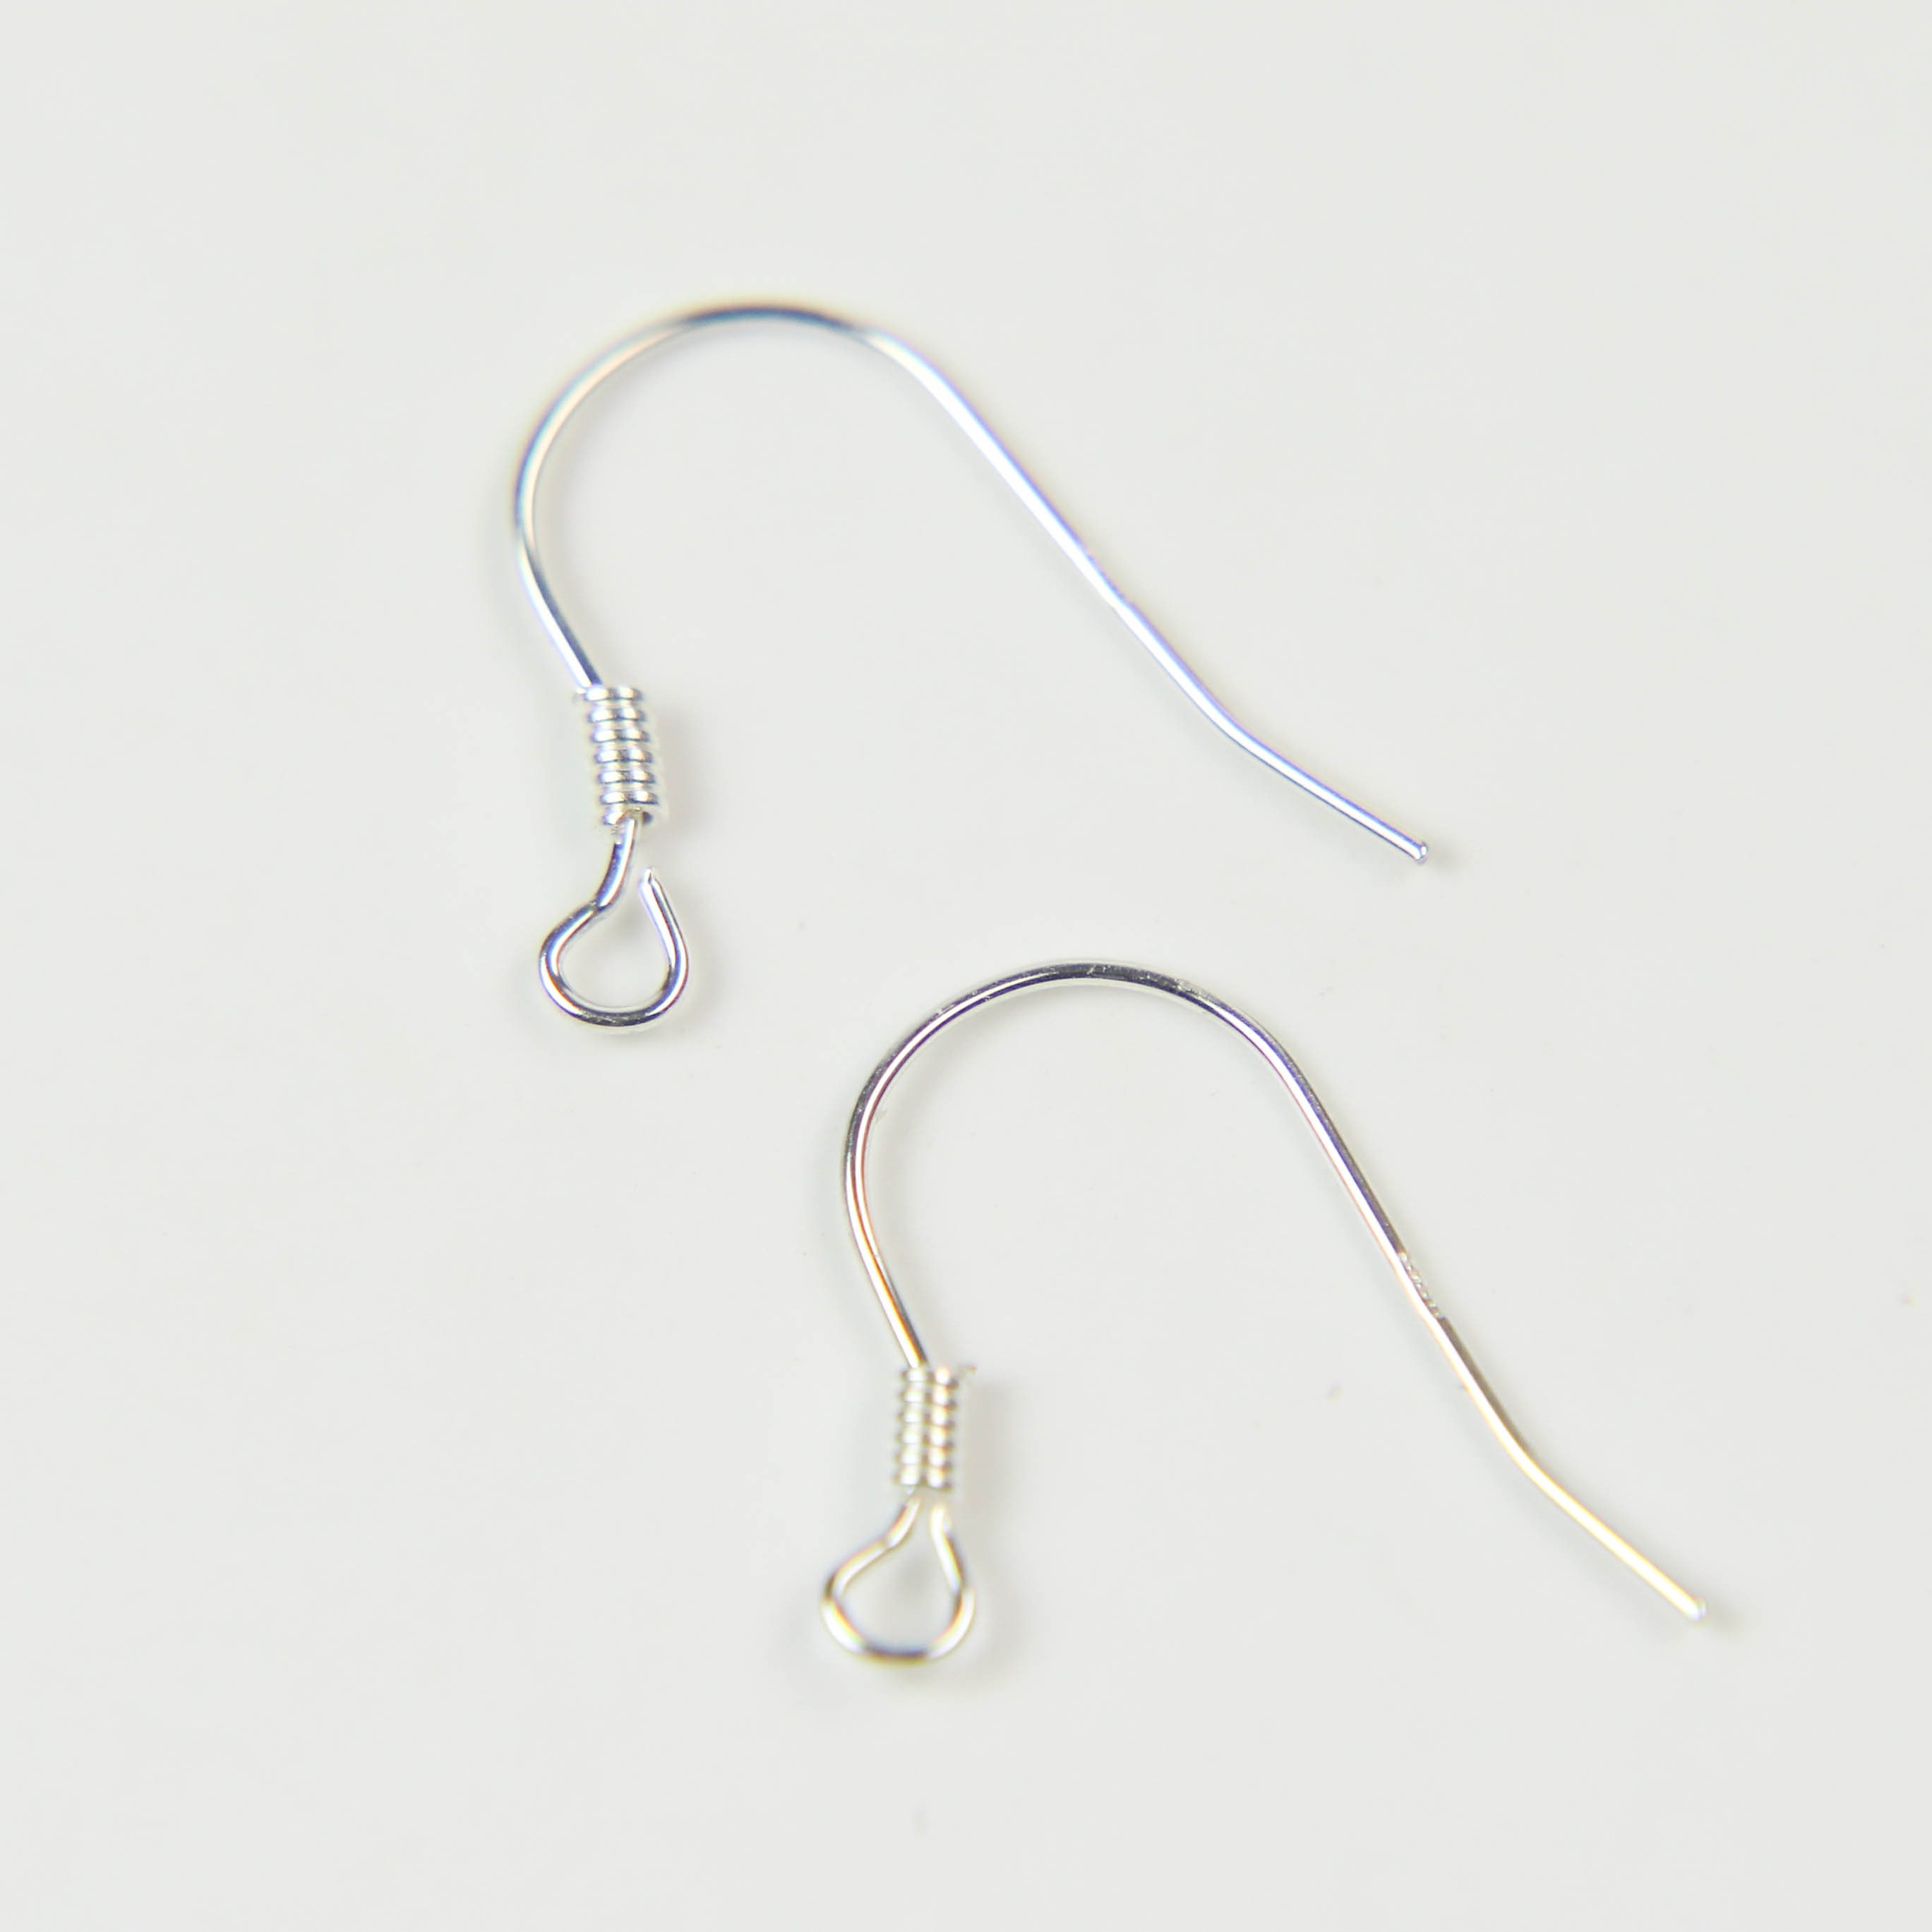 Wholesale 925 sterling silver fishhook earring hooks with spring, french  hook earring wires for jewelry making, sensitive ear earring hooks